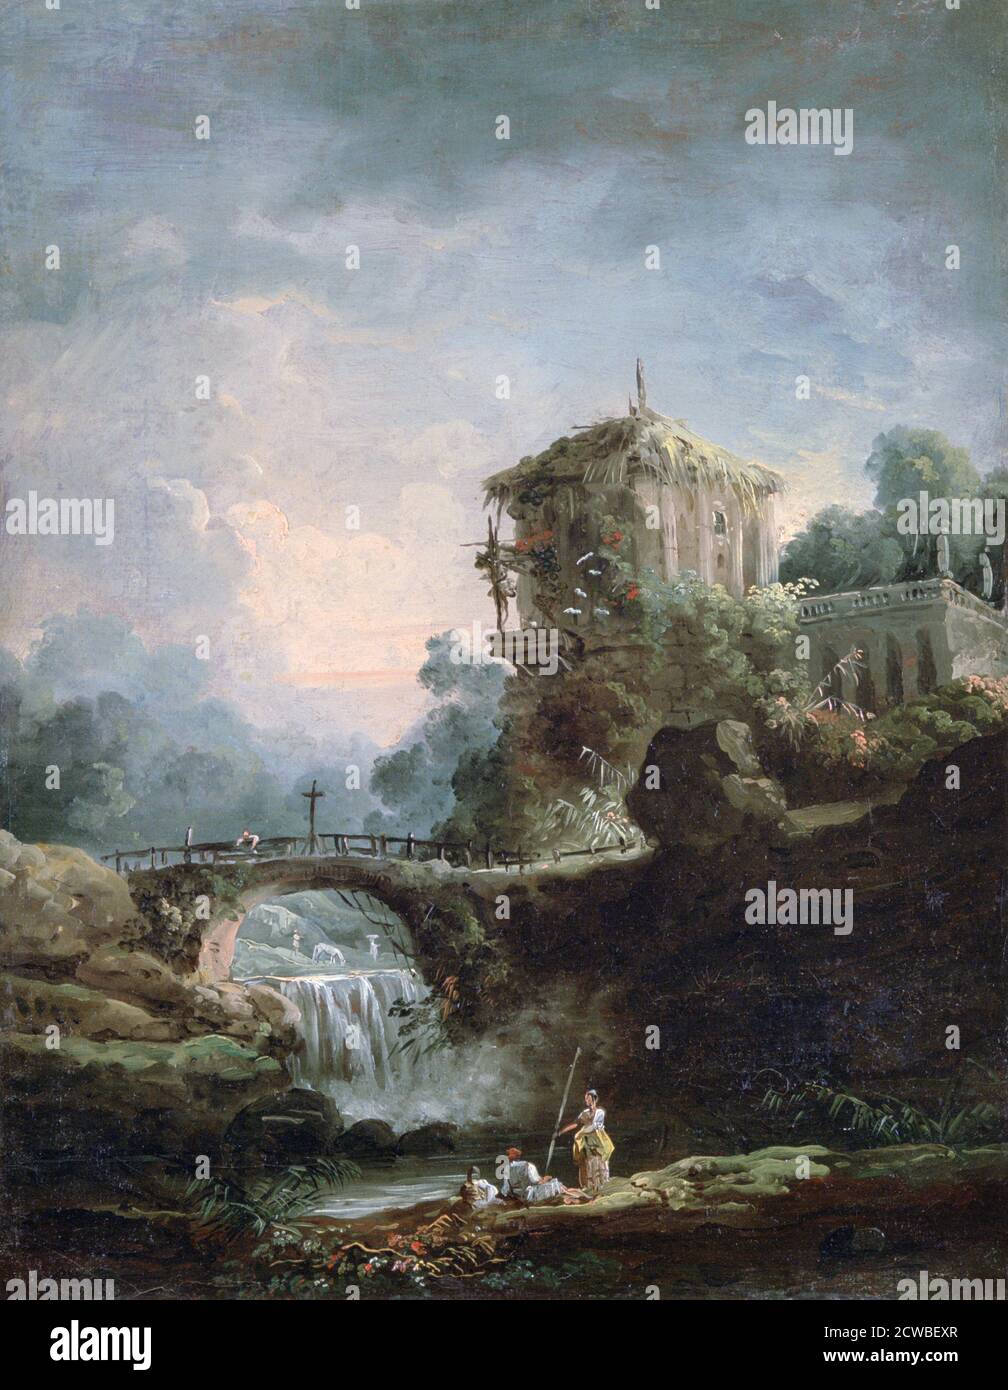 Landschaft mit Wasserfall', c1750-1808, Künstler: Hubert Robert. Hubert Robert (1733-1808) war ein französischer Rokoko-Maler. Stockfoto